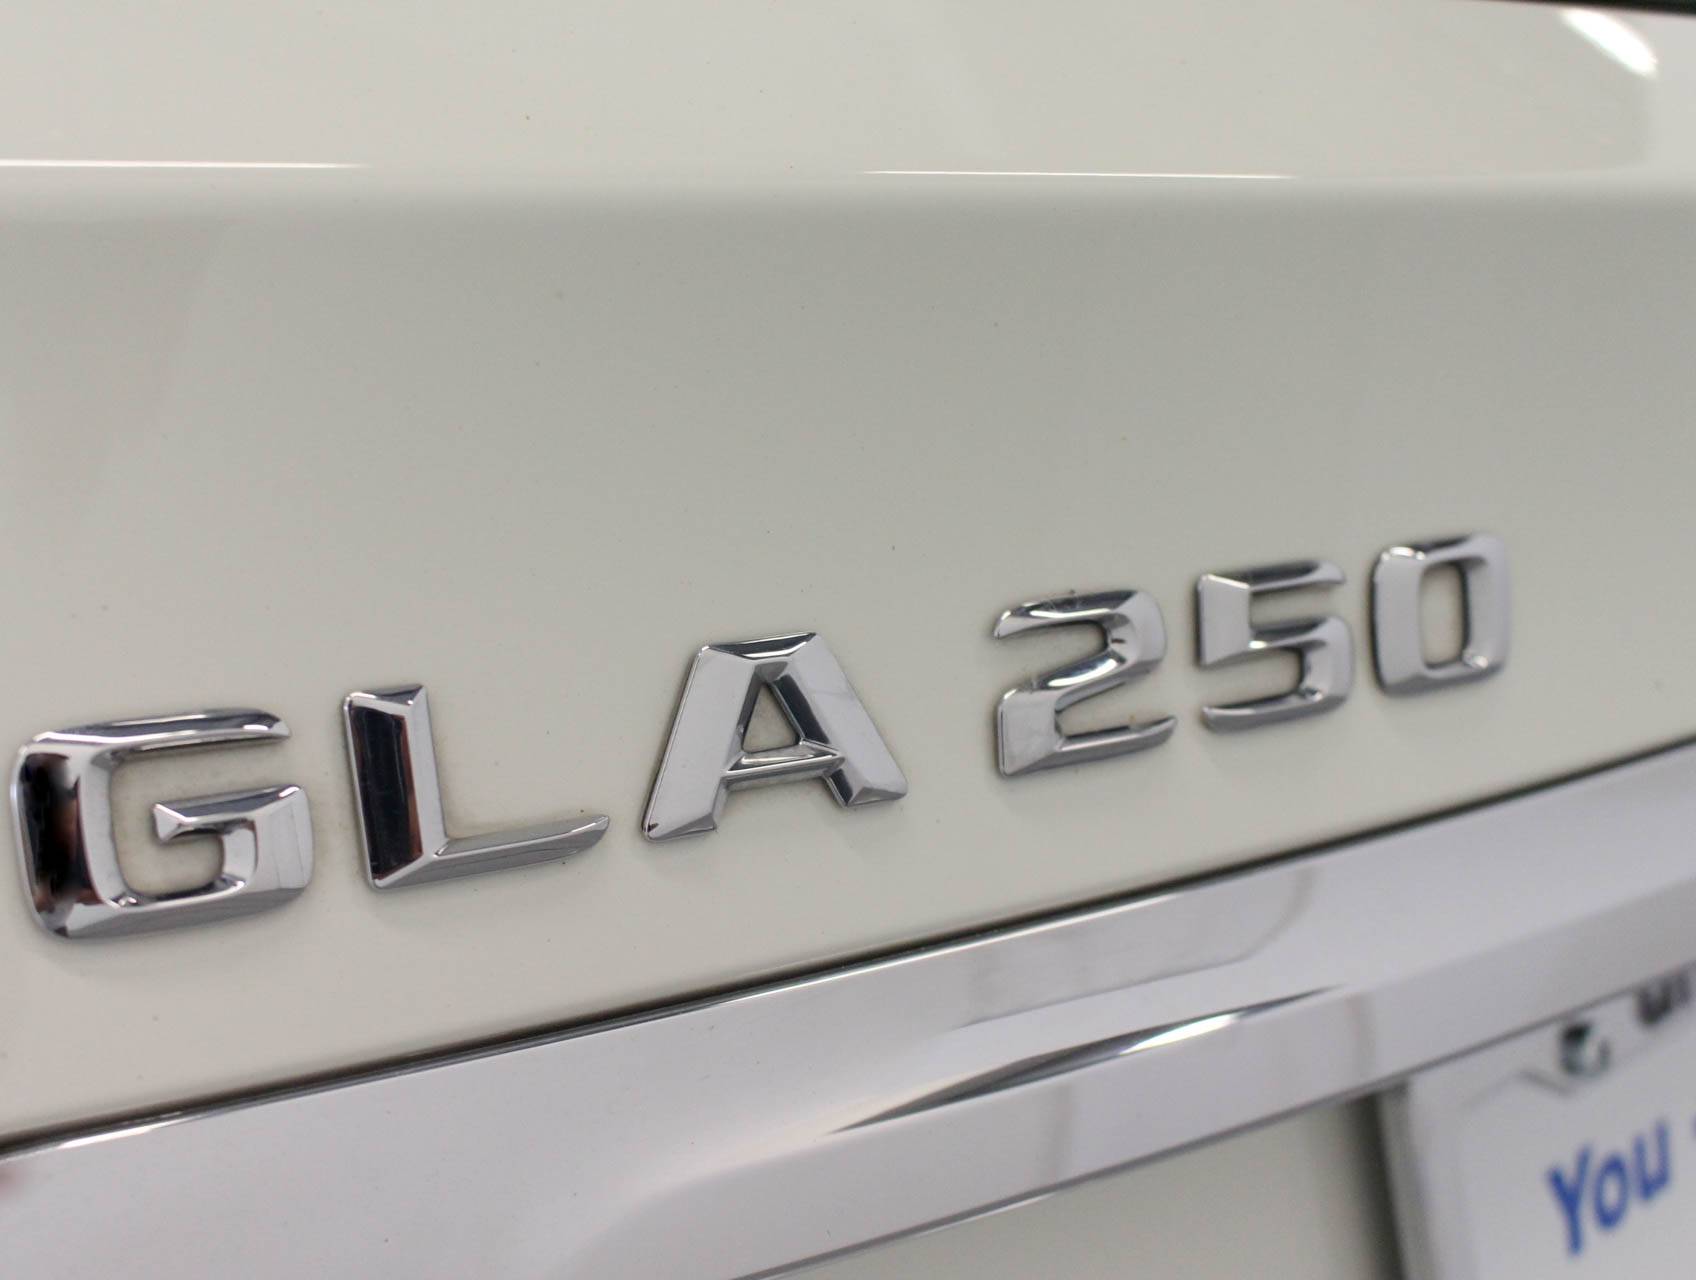 Florida Fine Cars - Used MERCEDES-BENZ GLA CLASS 2015 MARGATE GLA250 4MATIC